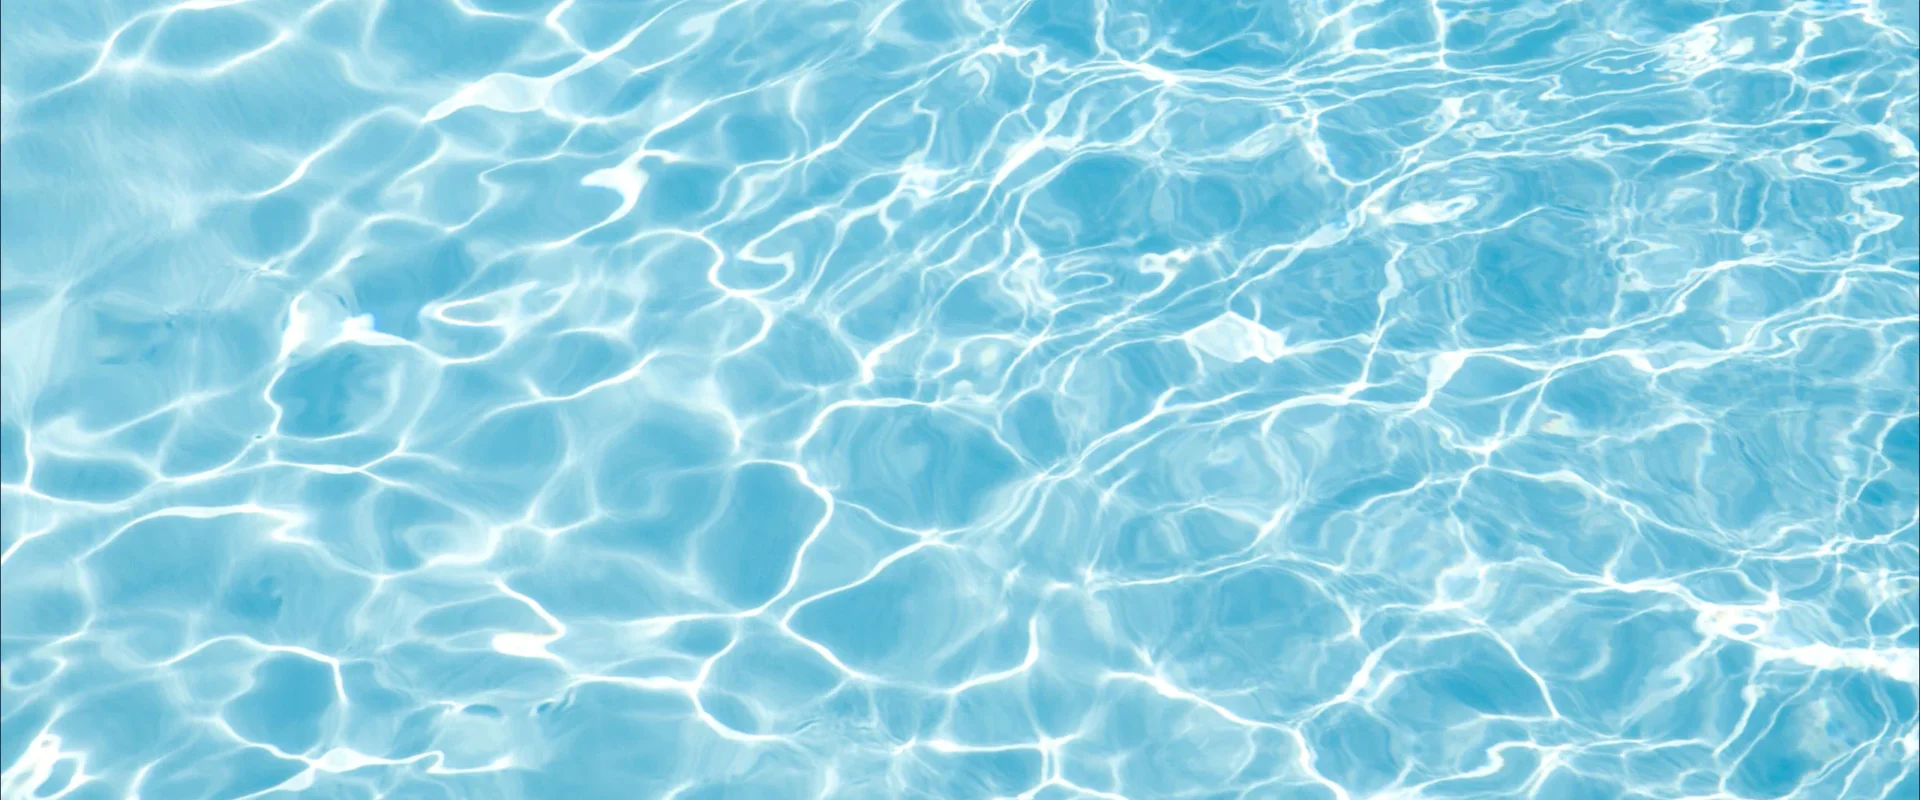 pool water texture